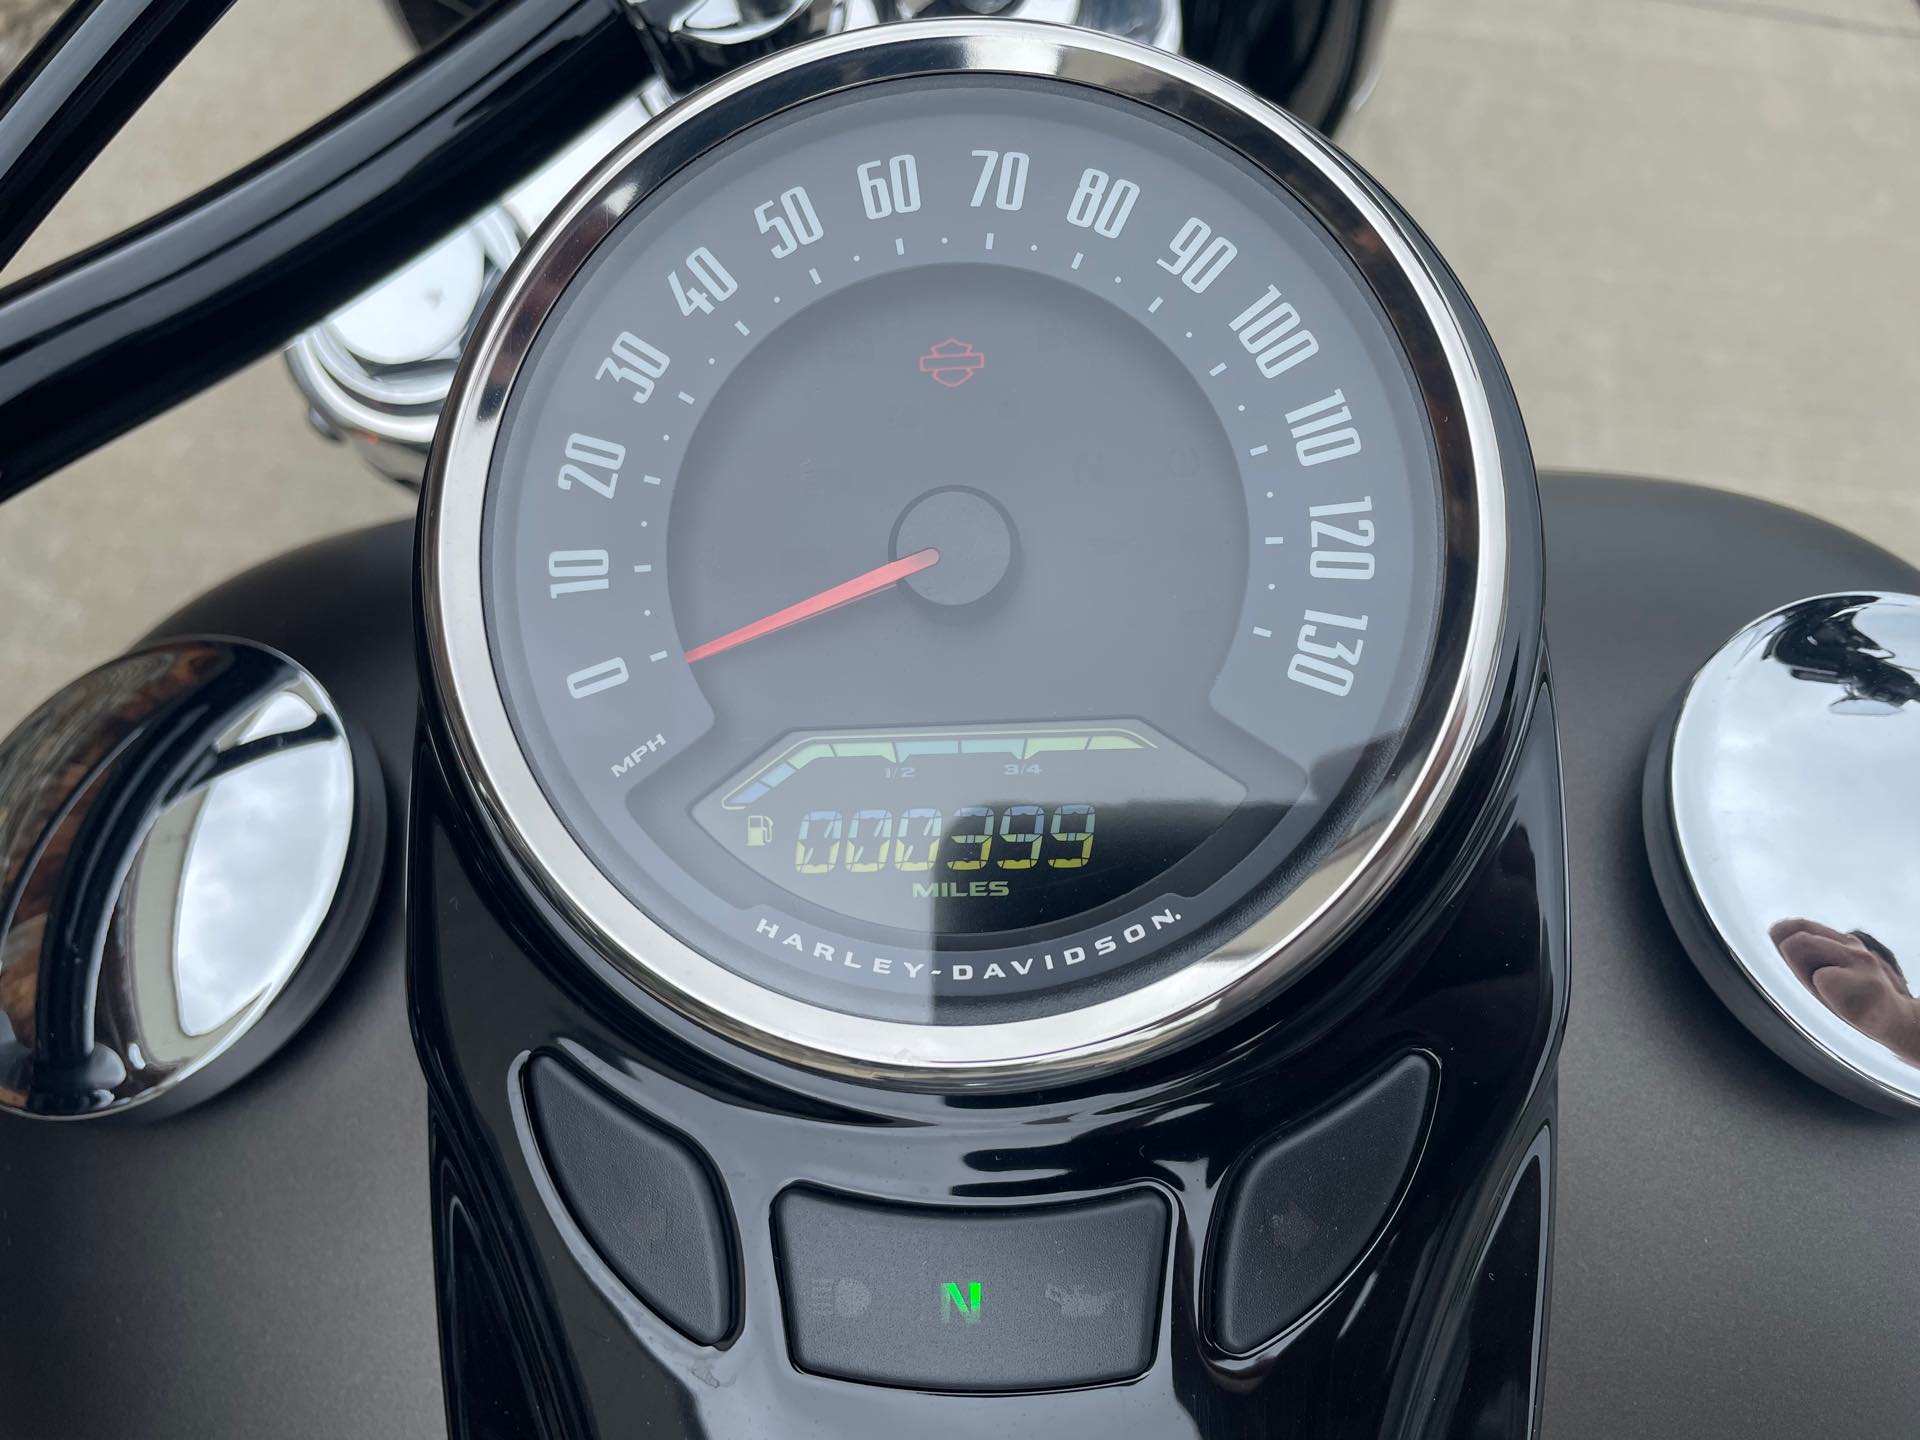 2021 Harley-Davidson Cruiser Softail Slim at Arkport Cycles